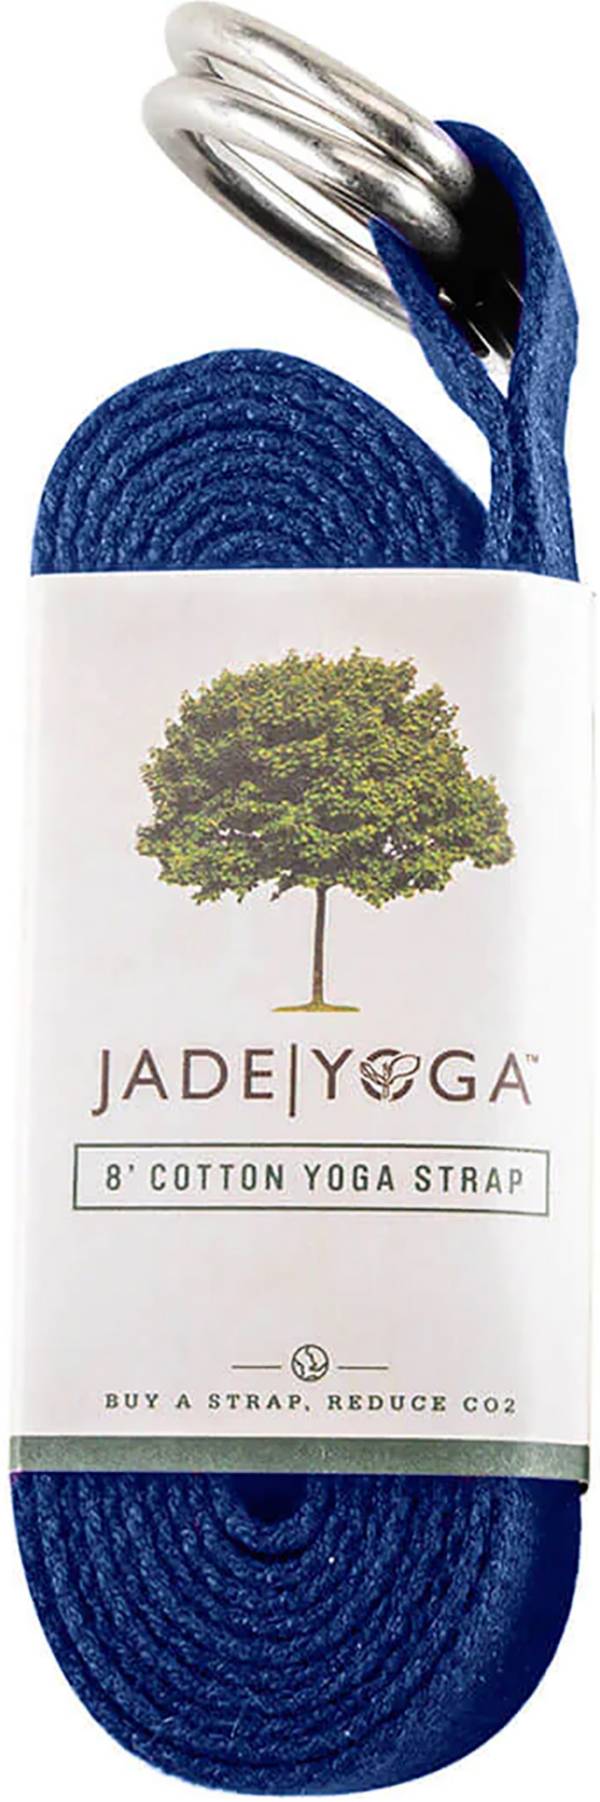 Jade Yoga Cotton Yoga Strap product image